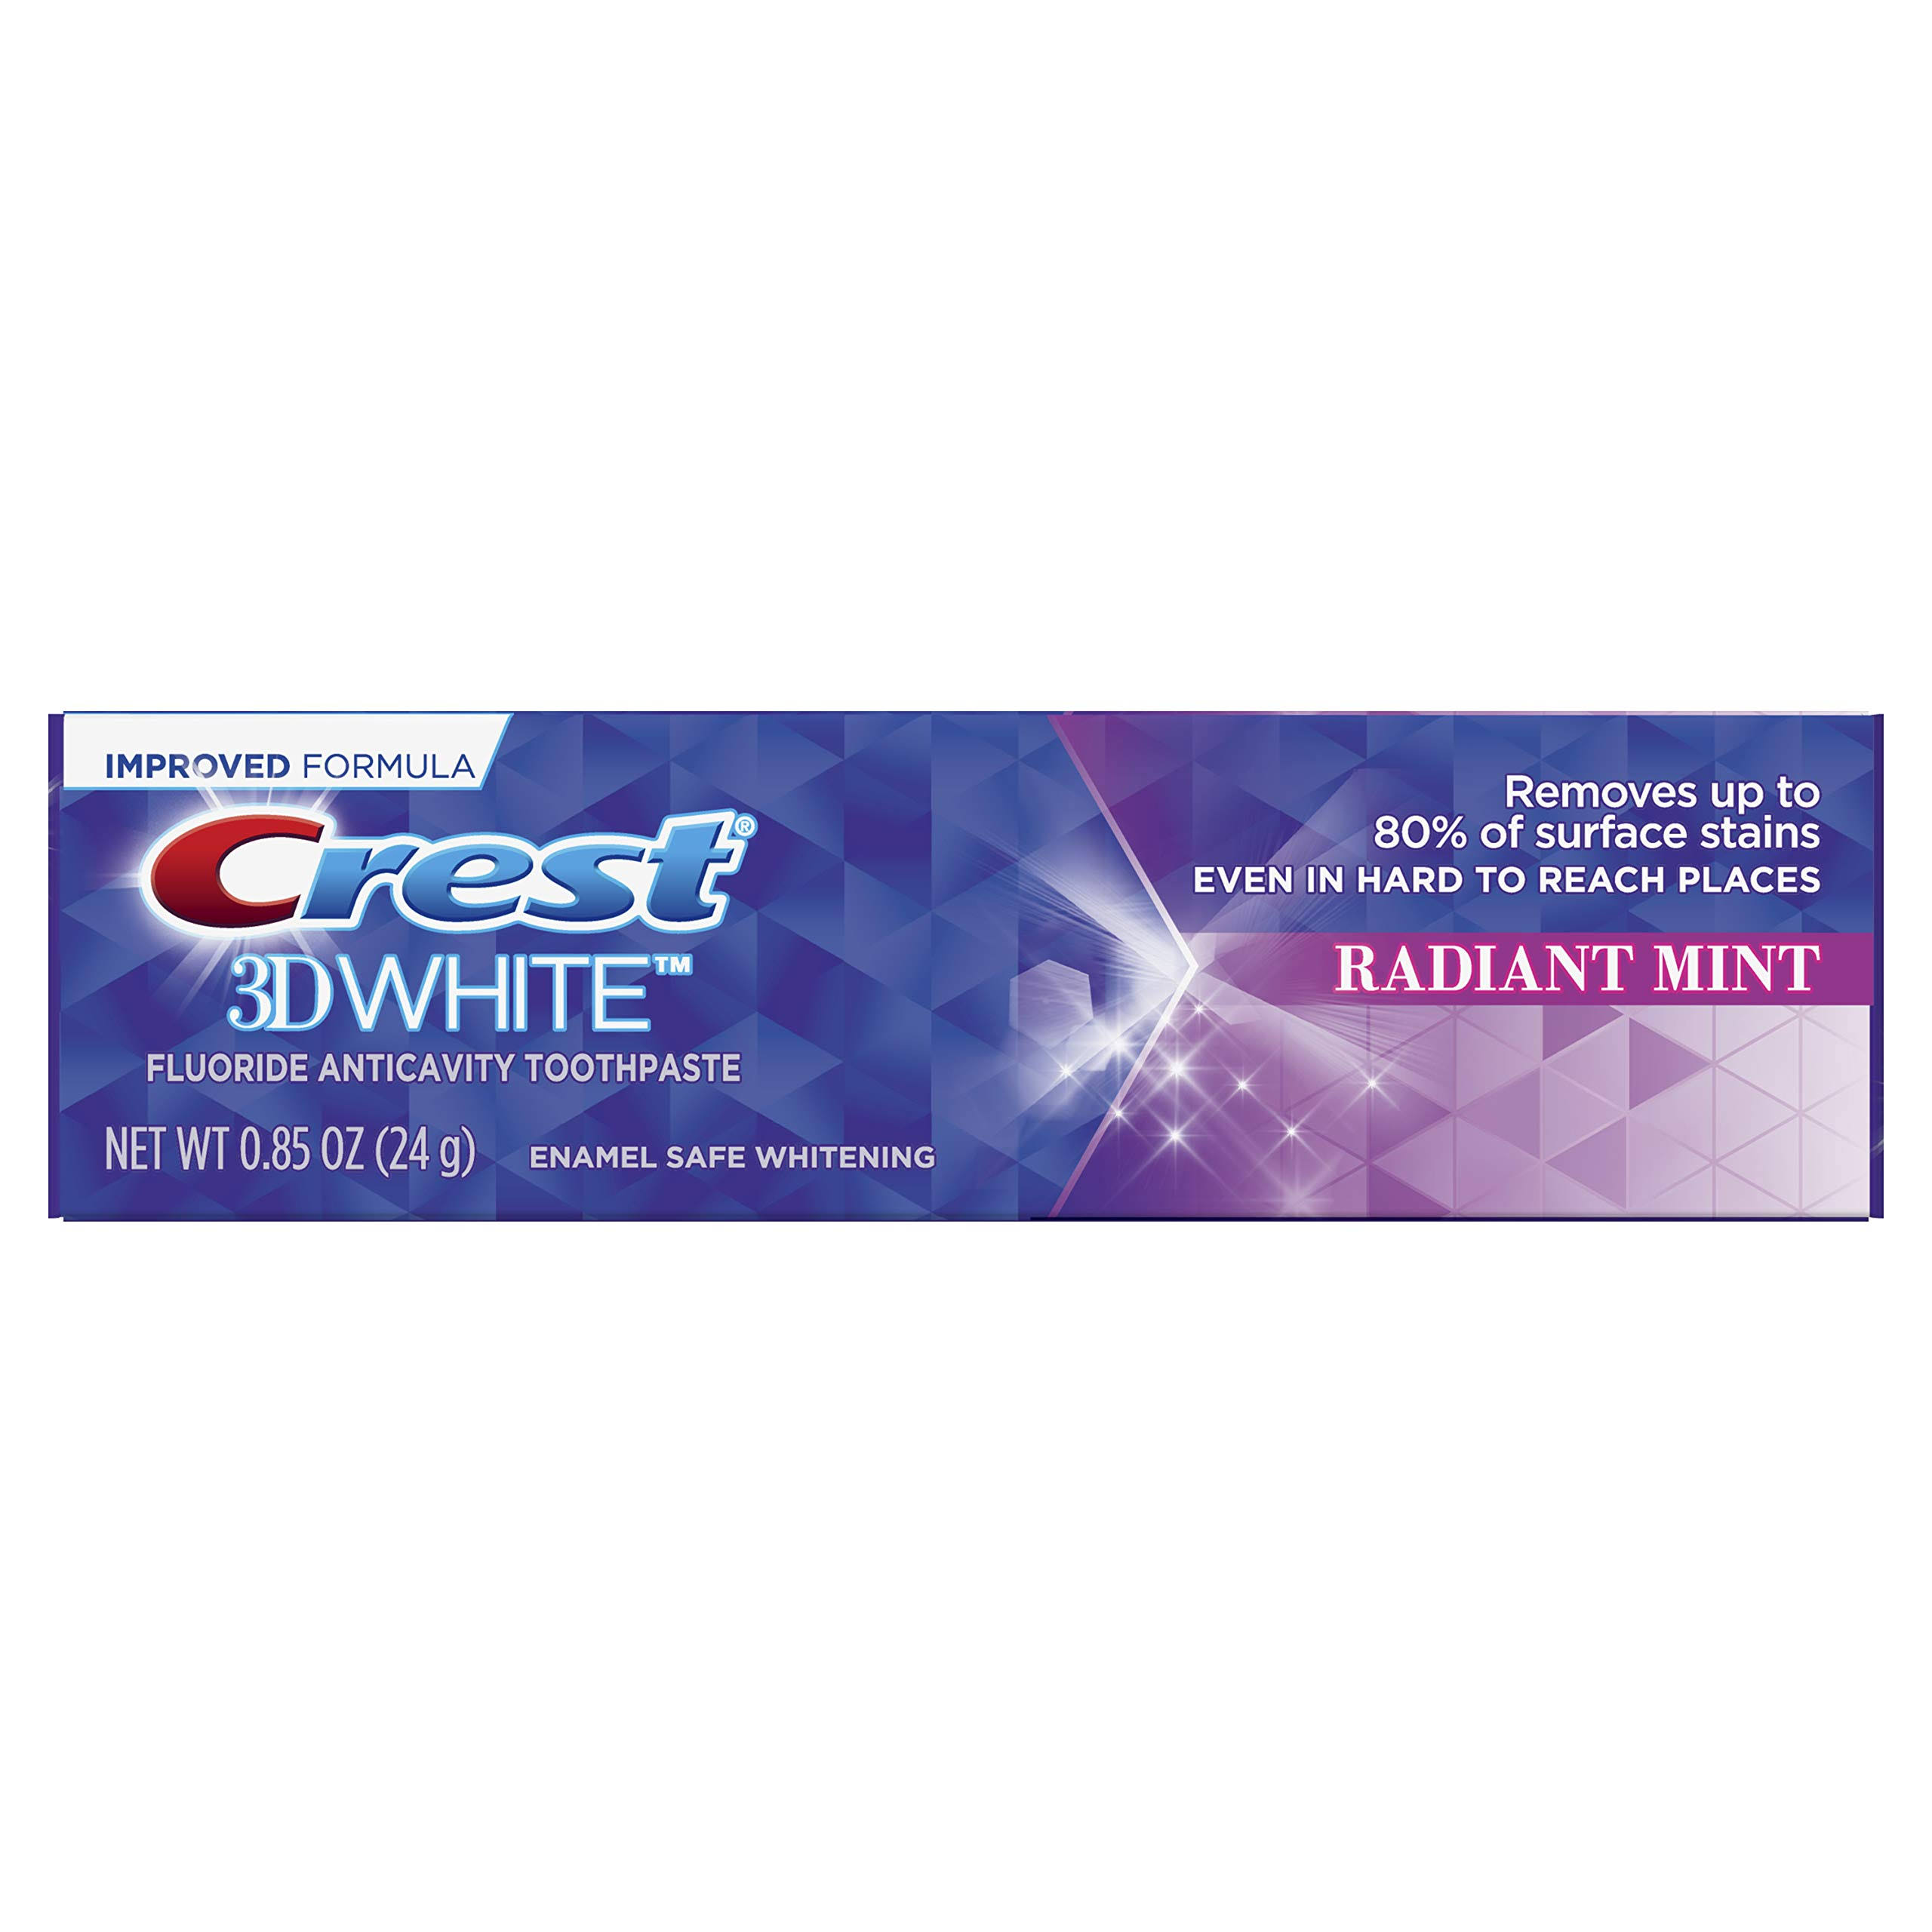 Crest 3D White Vivid Fluoride Anticavity Toothpaste - Radiant Mint, 0.85oz